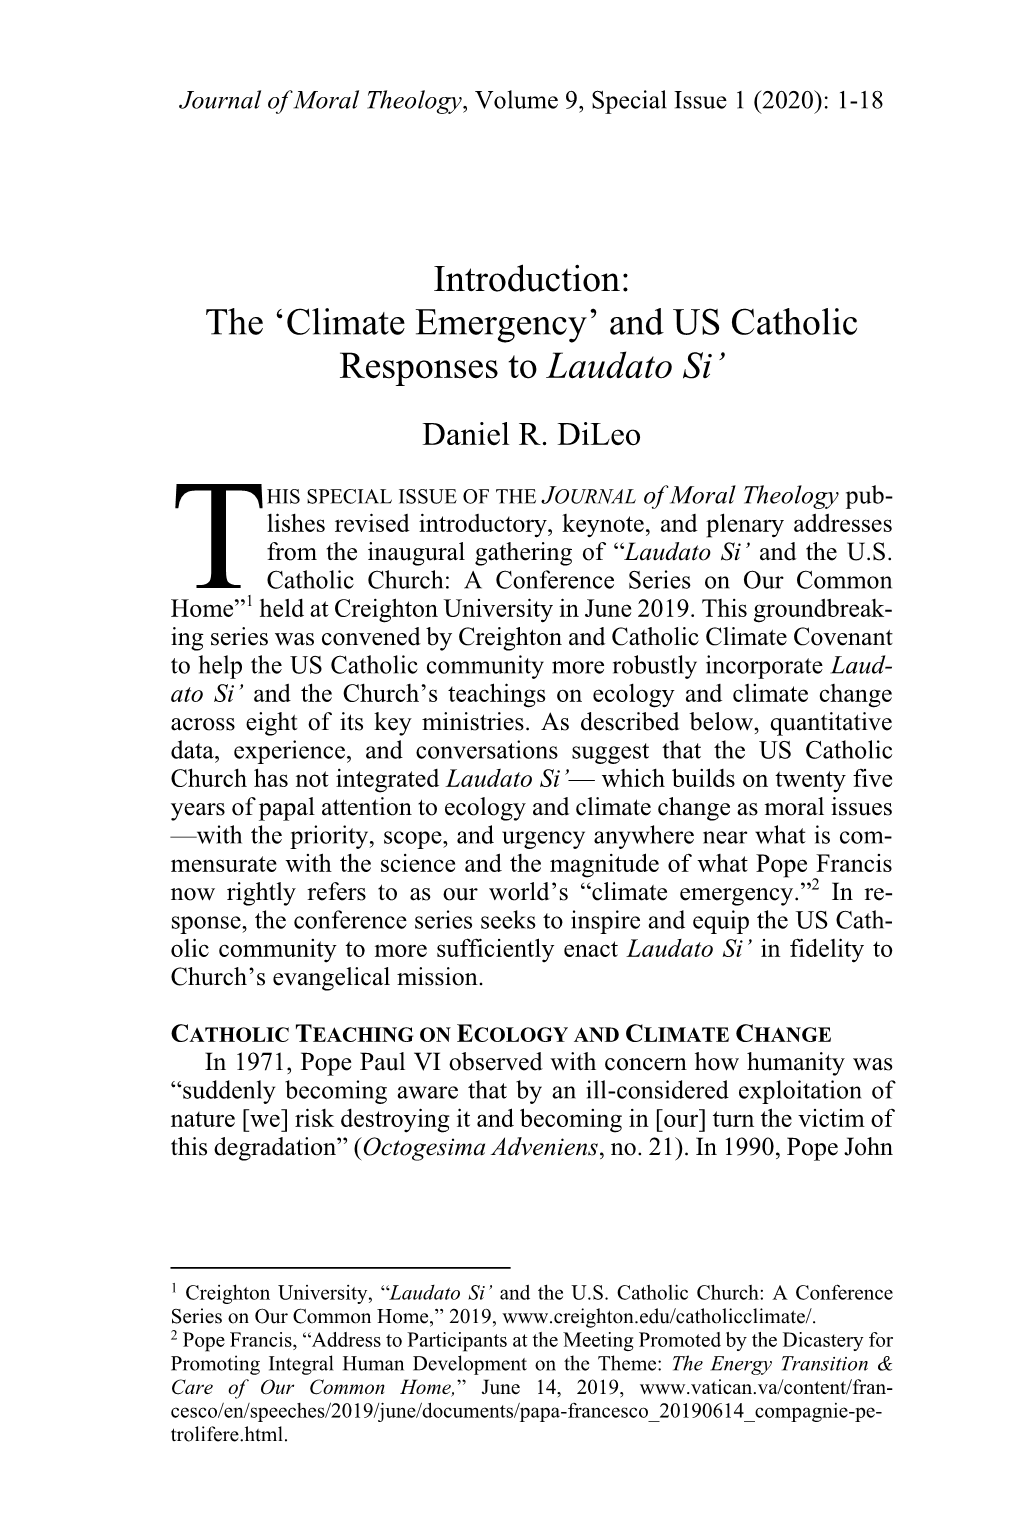 'Climate Emergency' and US Catholic Responses to Laudato